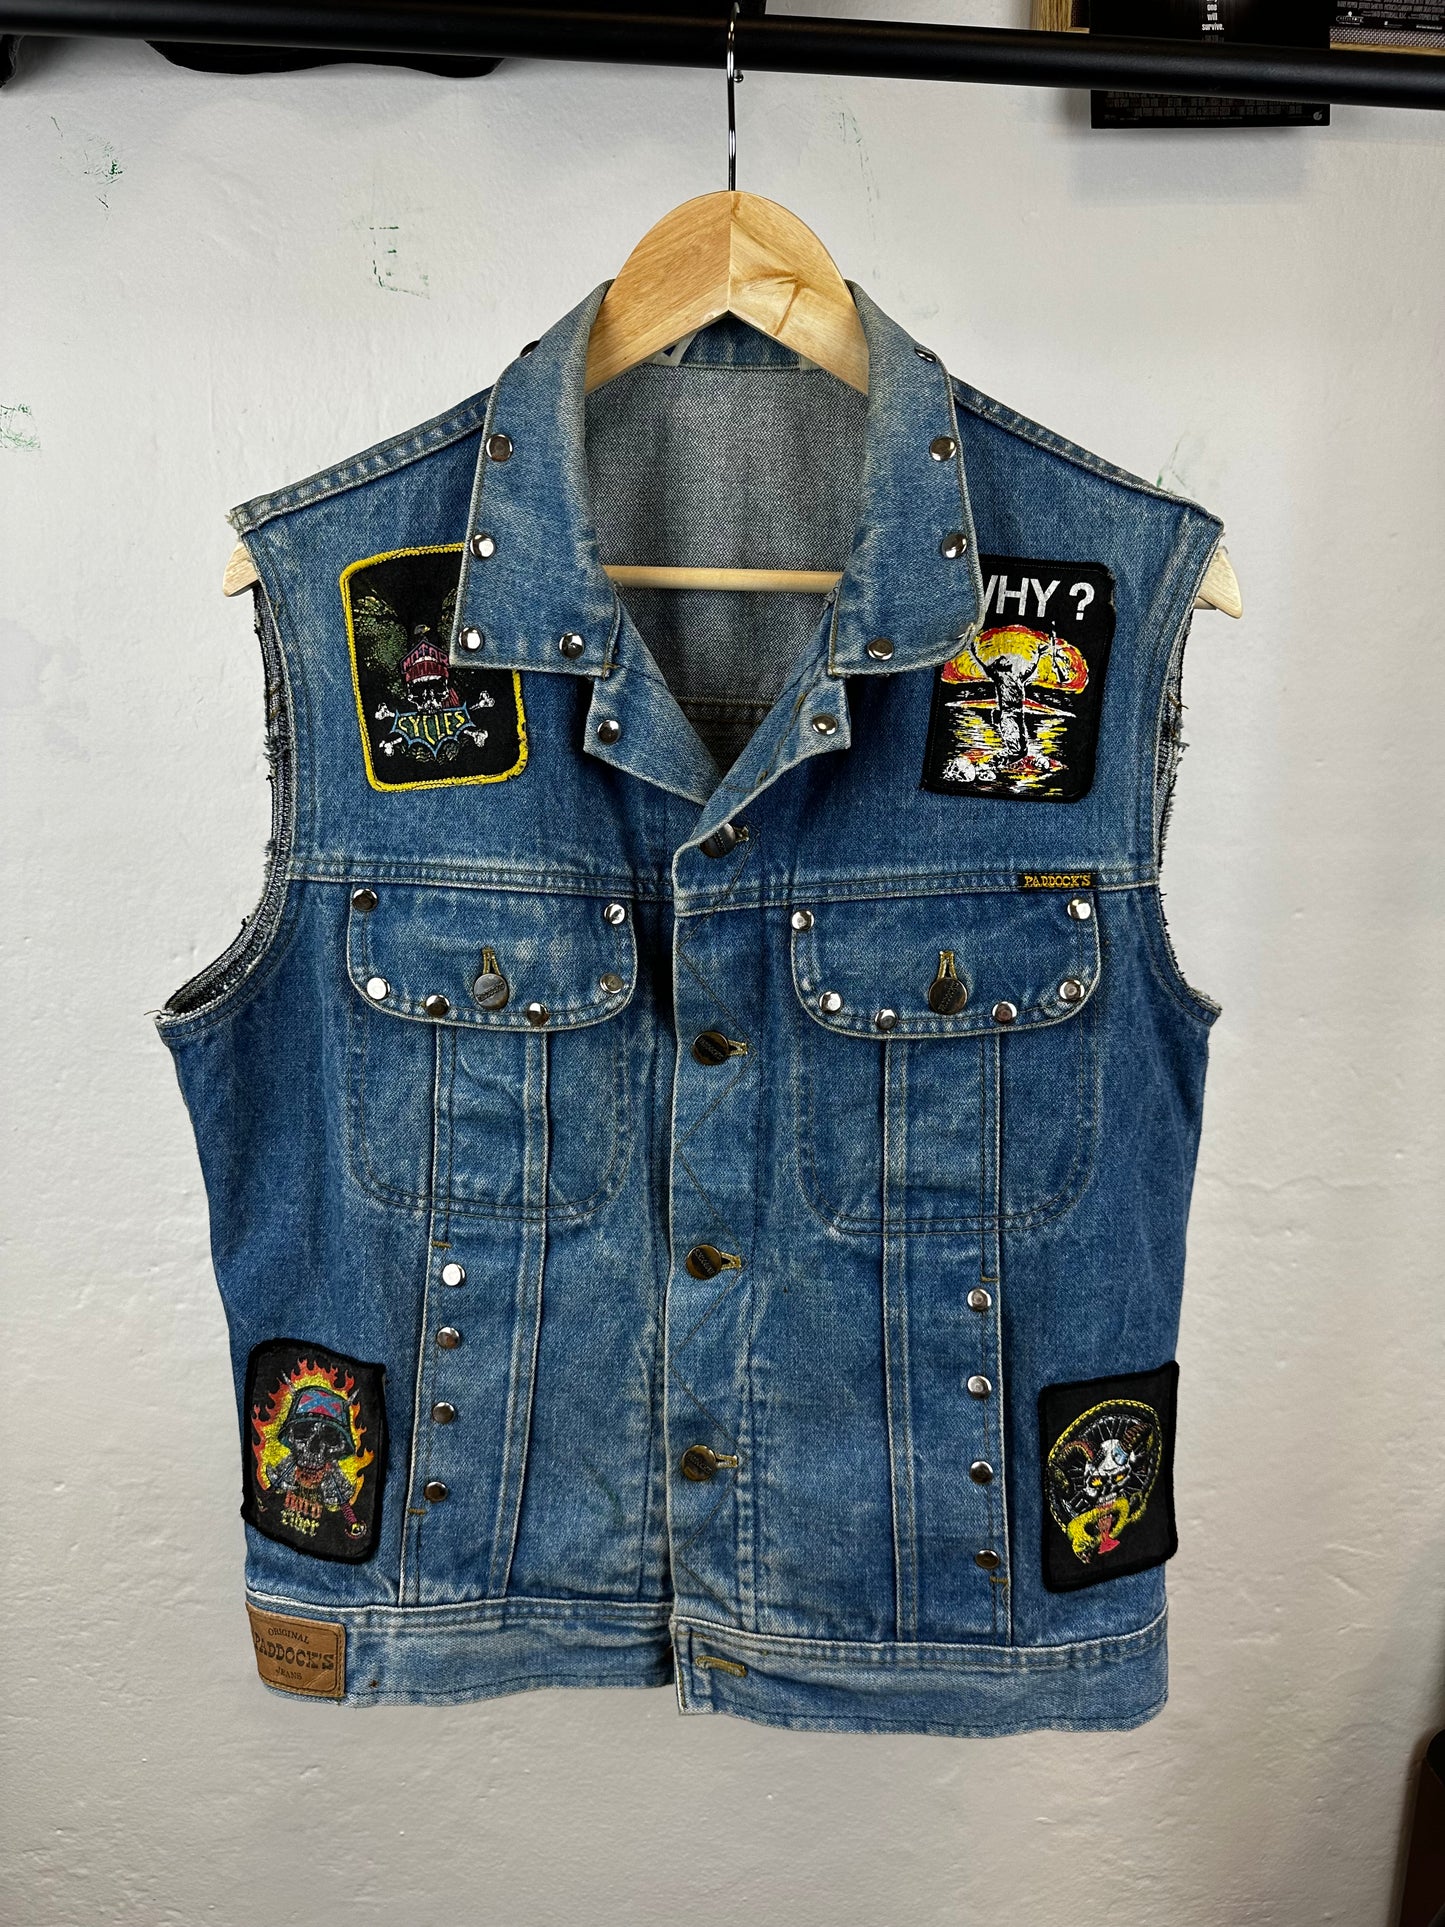 Vintage Denim “Stop the Nukes” jacket